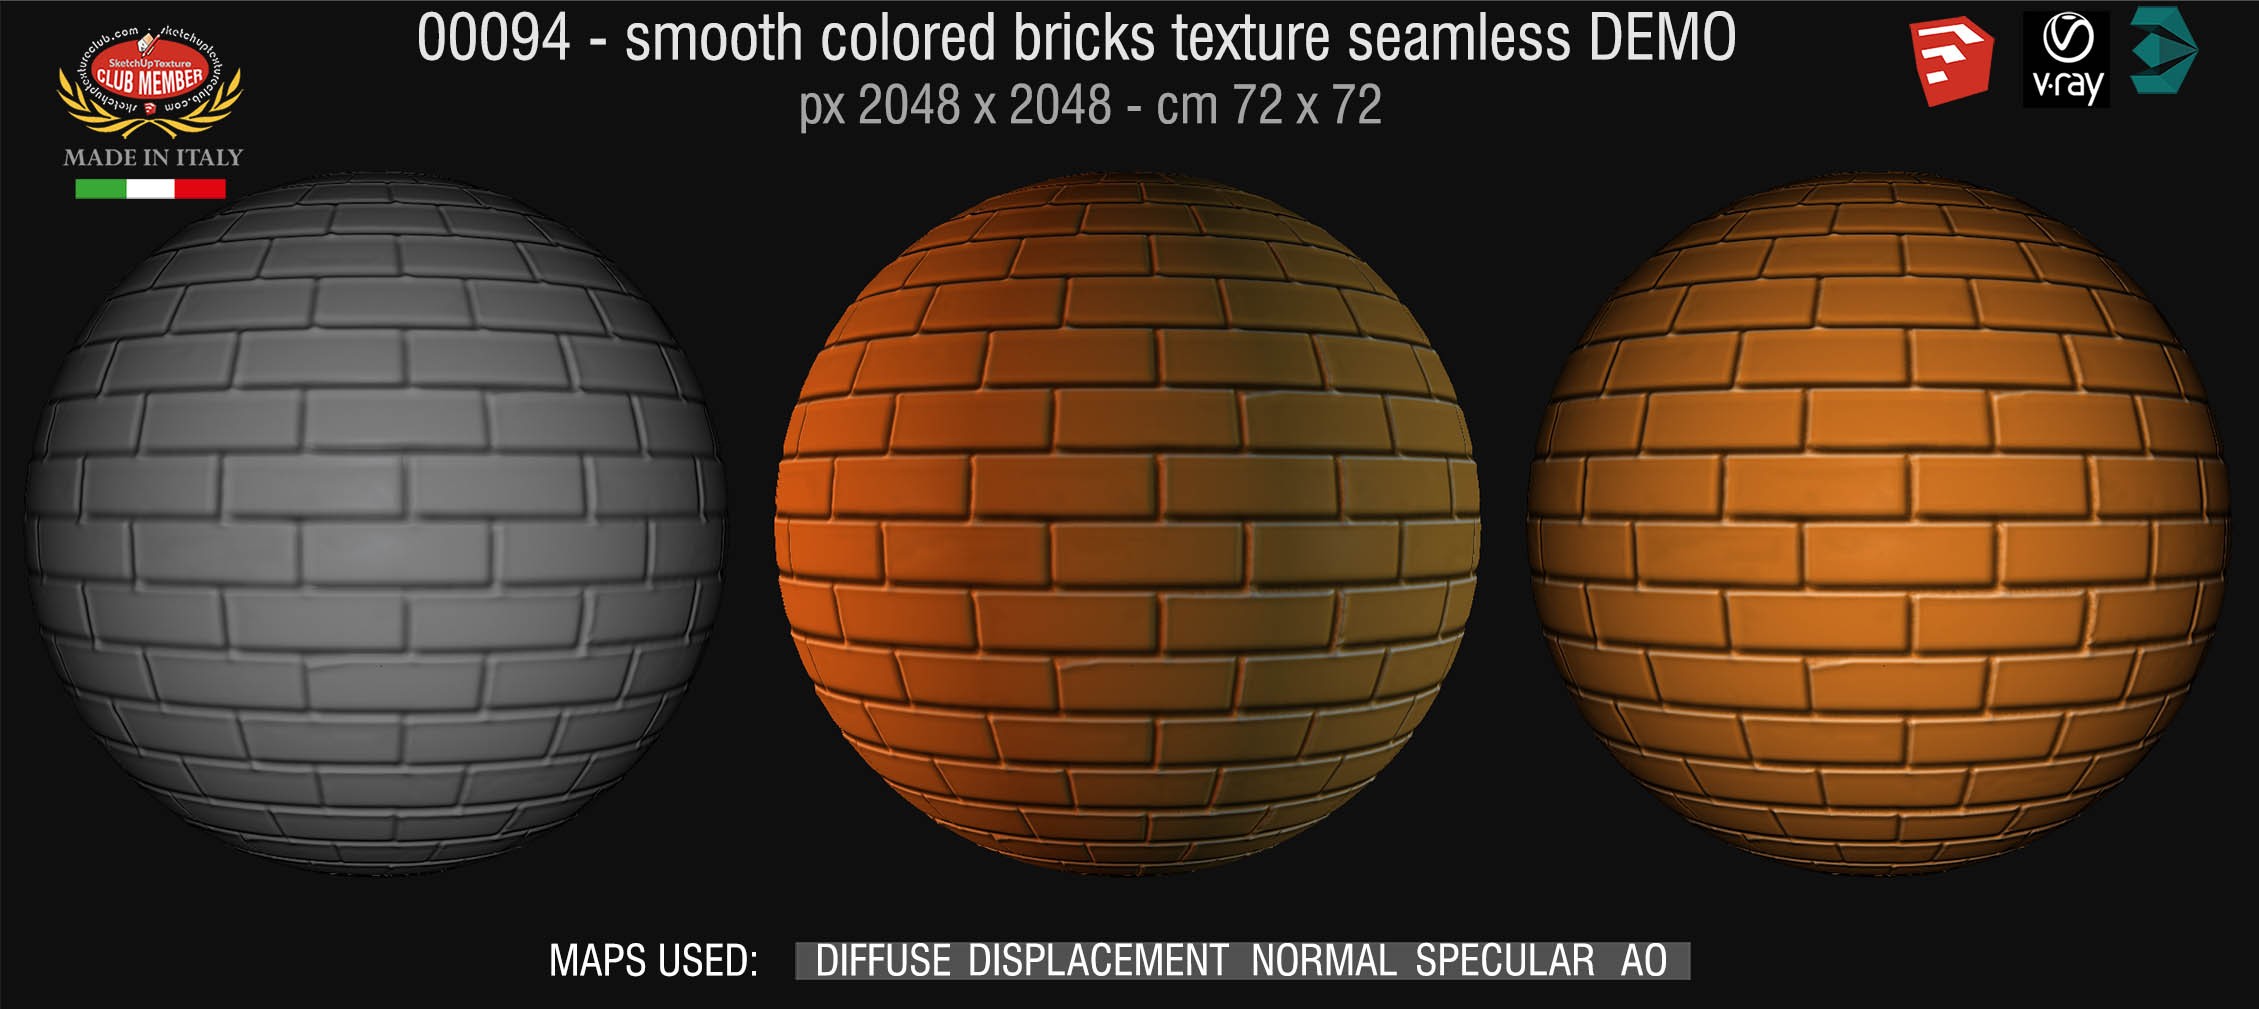 00094 smooth colored bricks texture seamless + maps DEMO